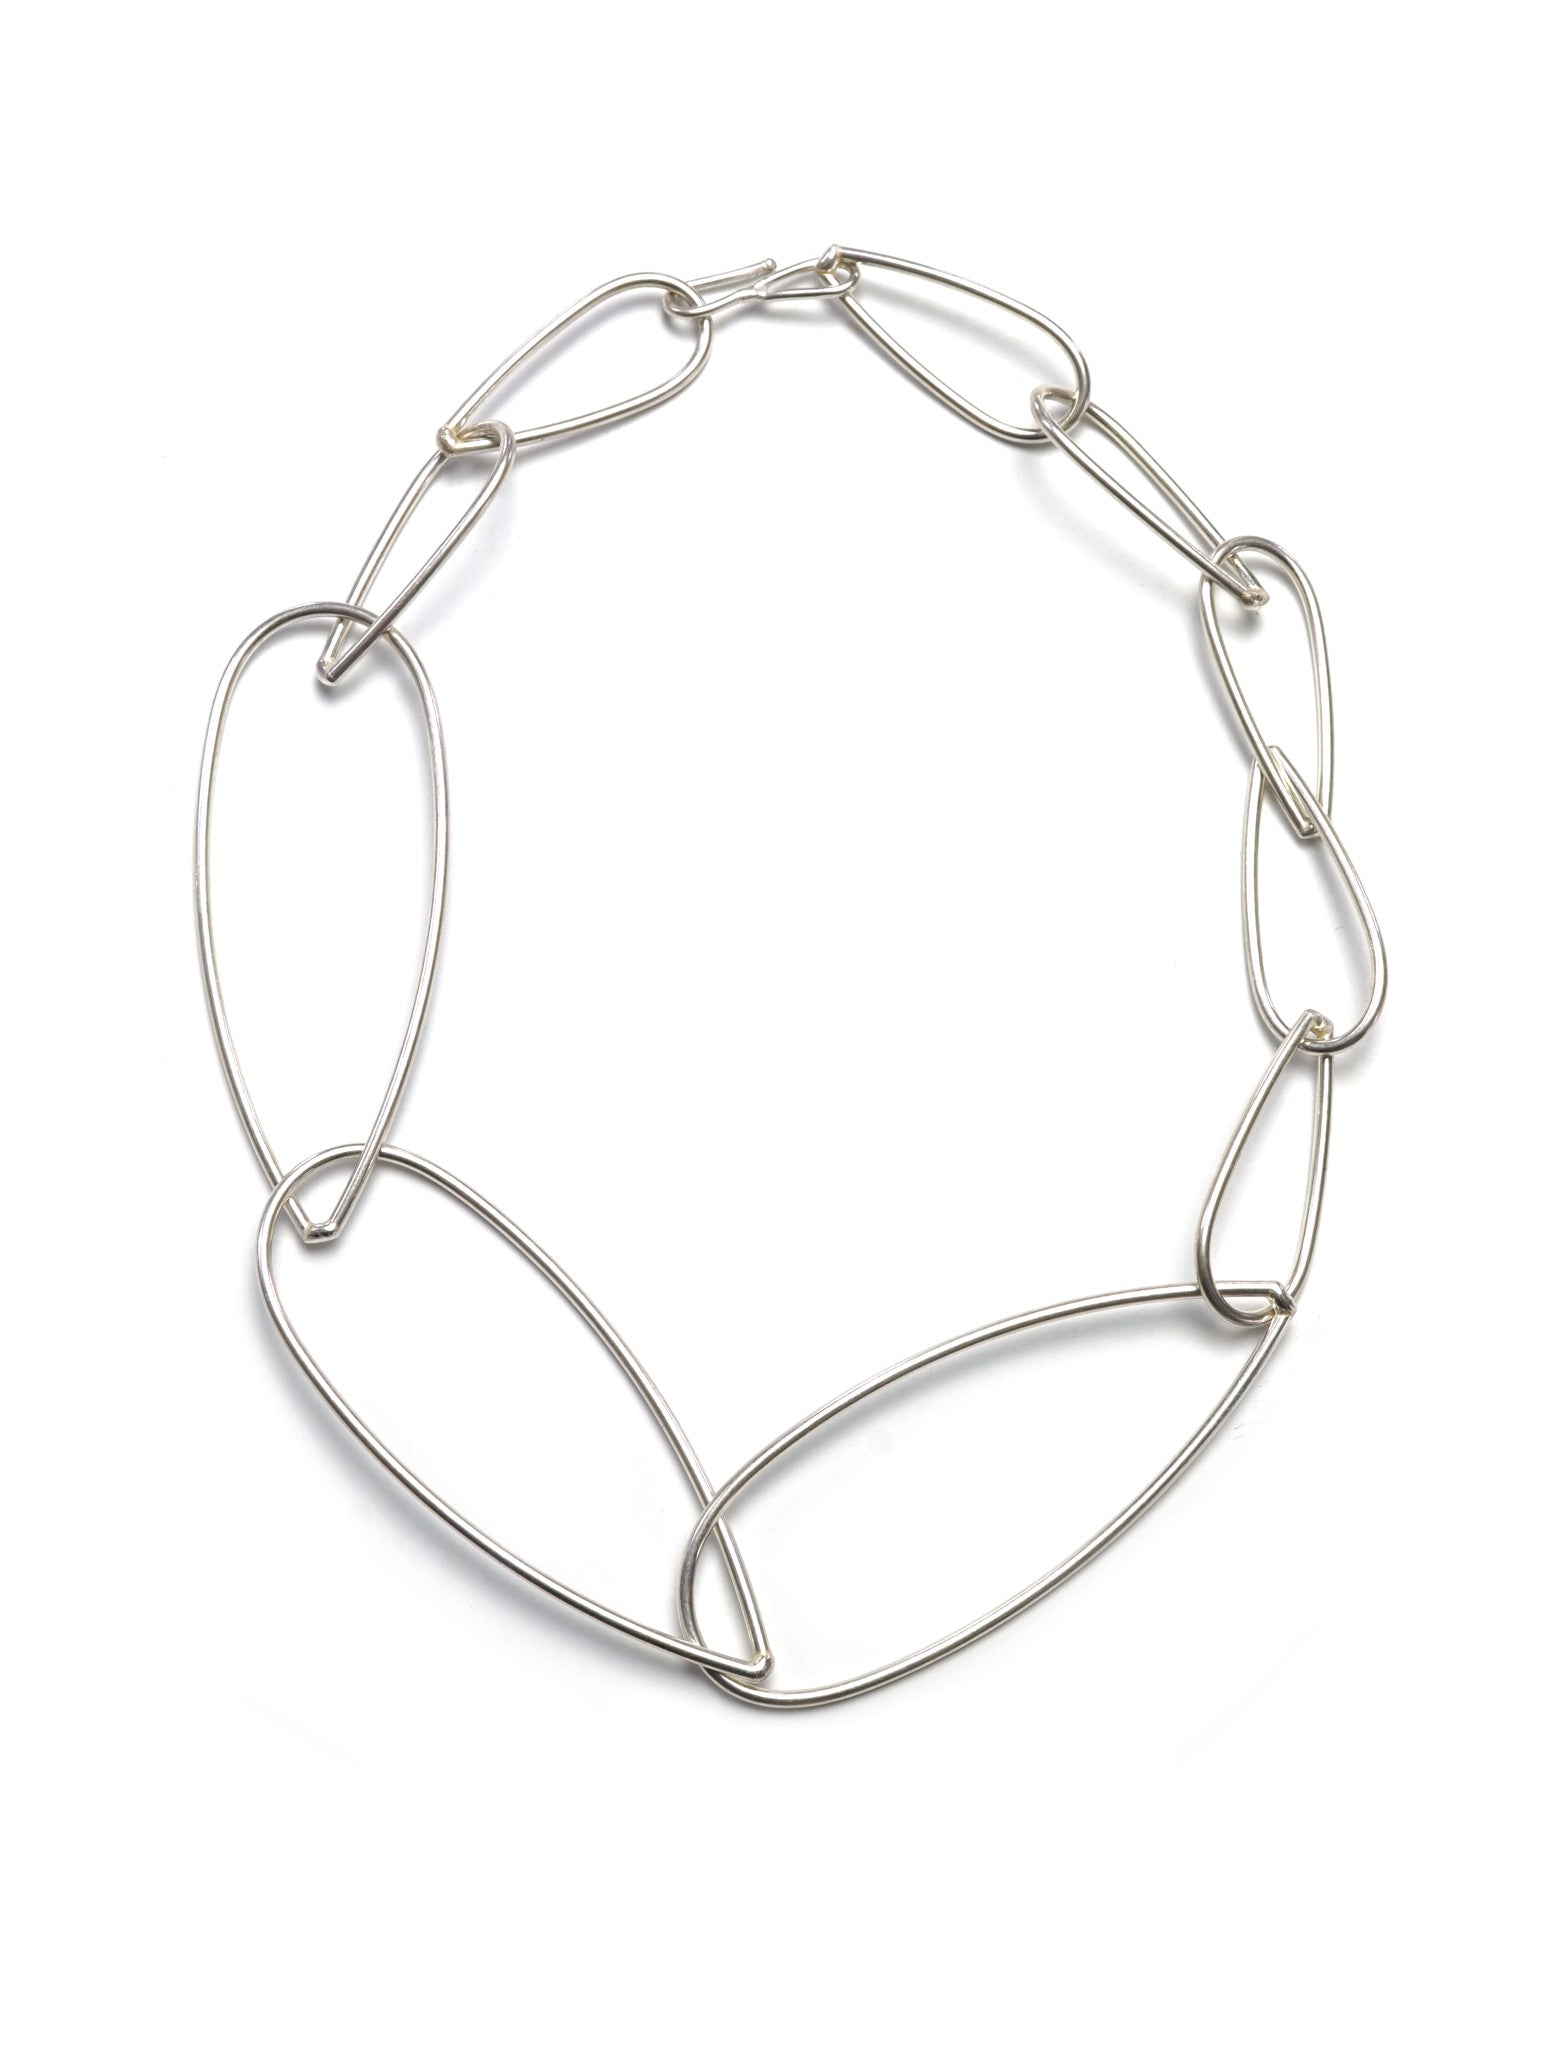 Modular Necklace No. 3 in silver